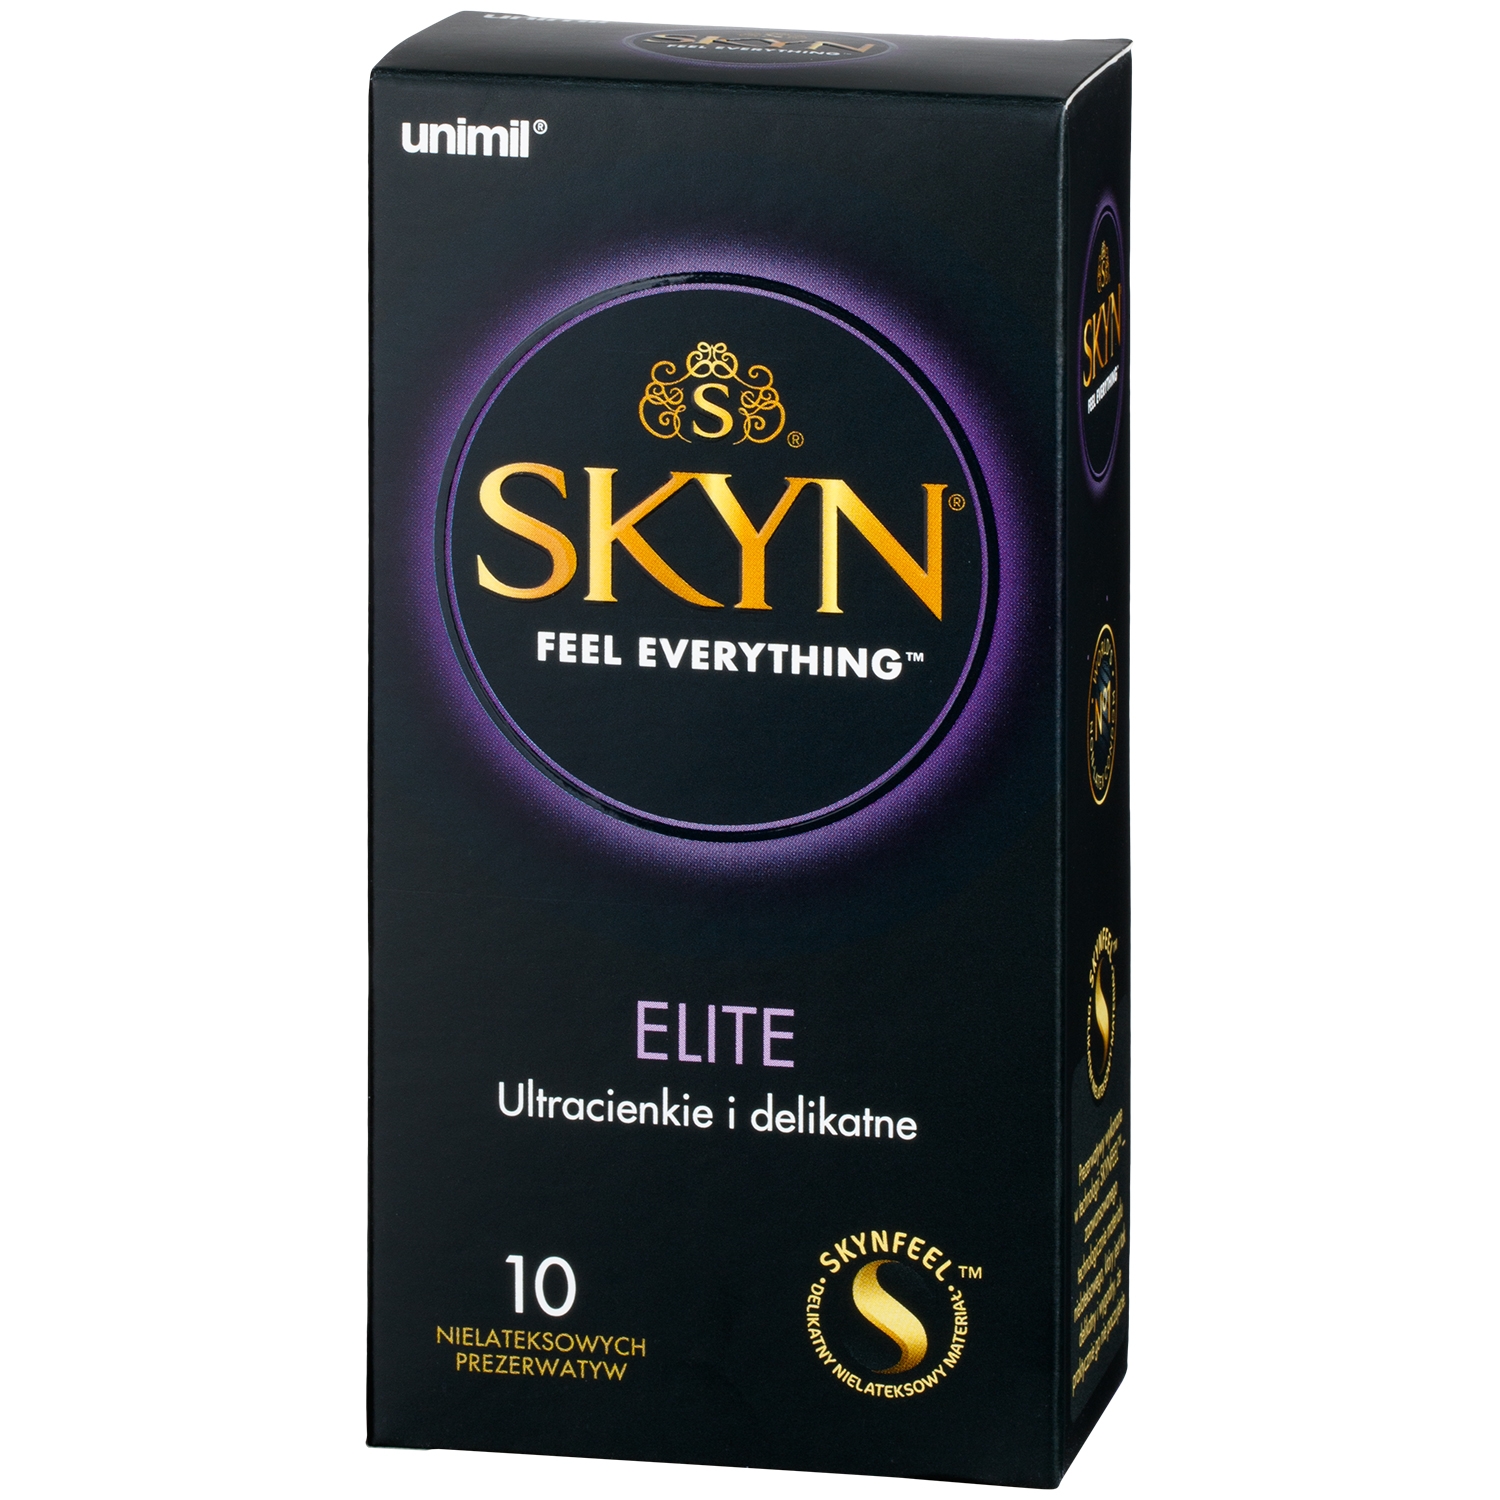 SKYN Elite Latexfri Kondomer 10 stk - Klar thumbnail